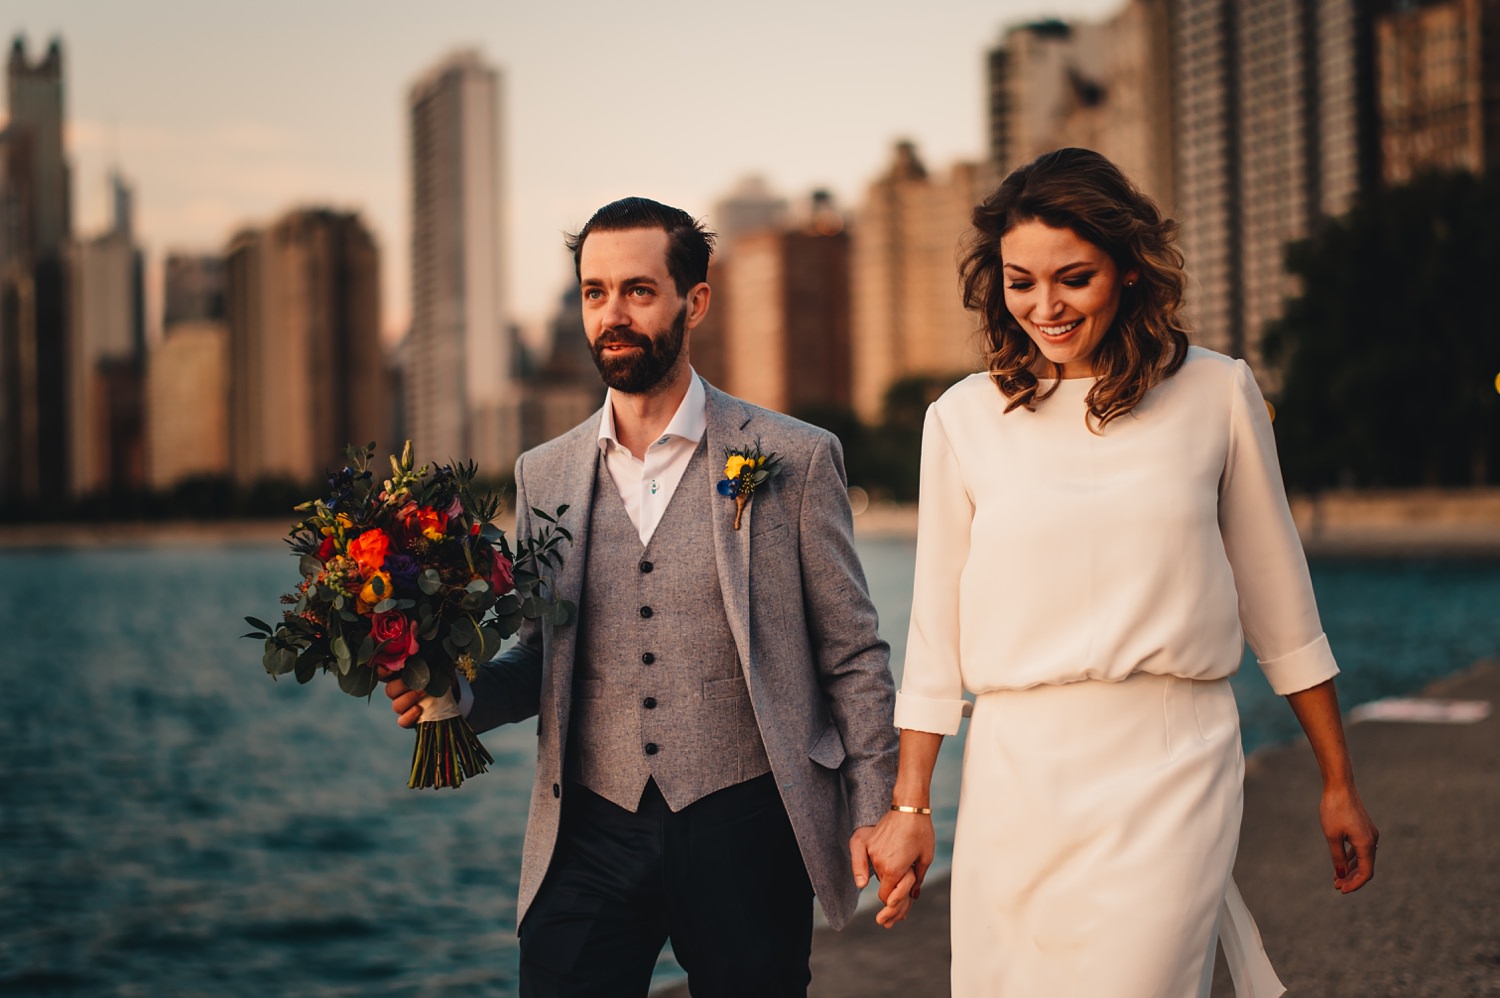 Sunrise Chicago Wedding - The Adamkovi, bride and groom creative portraits